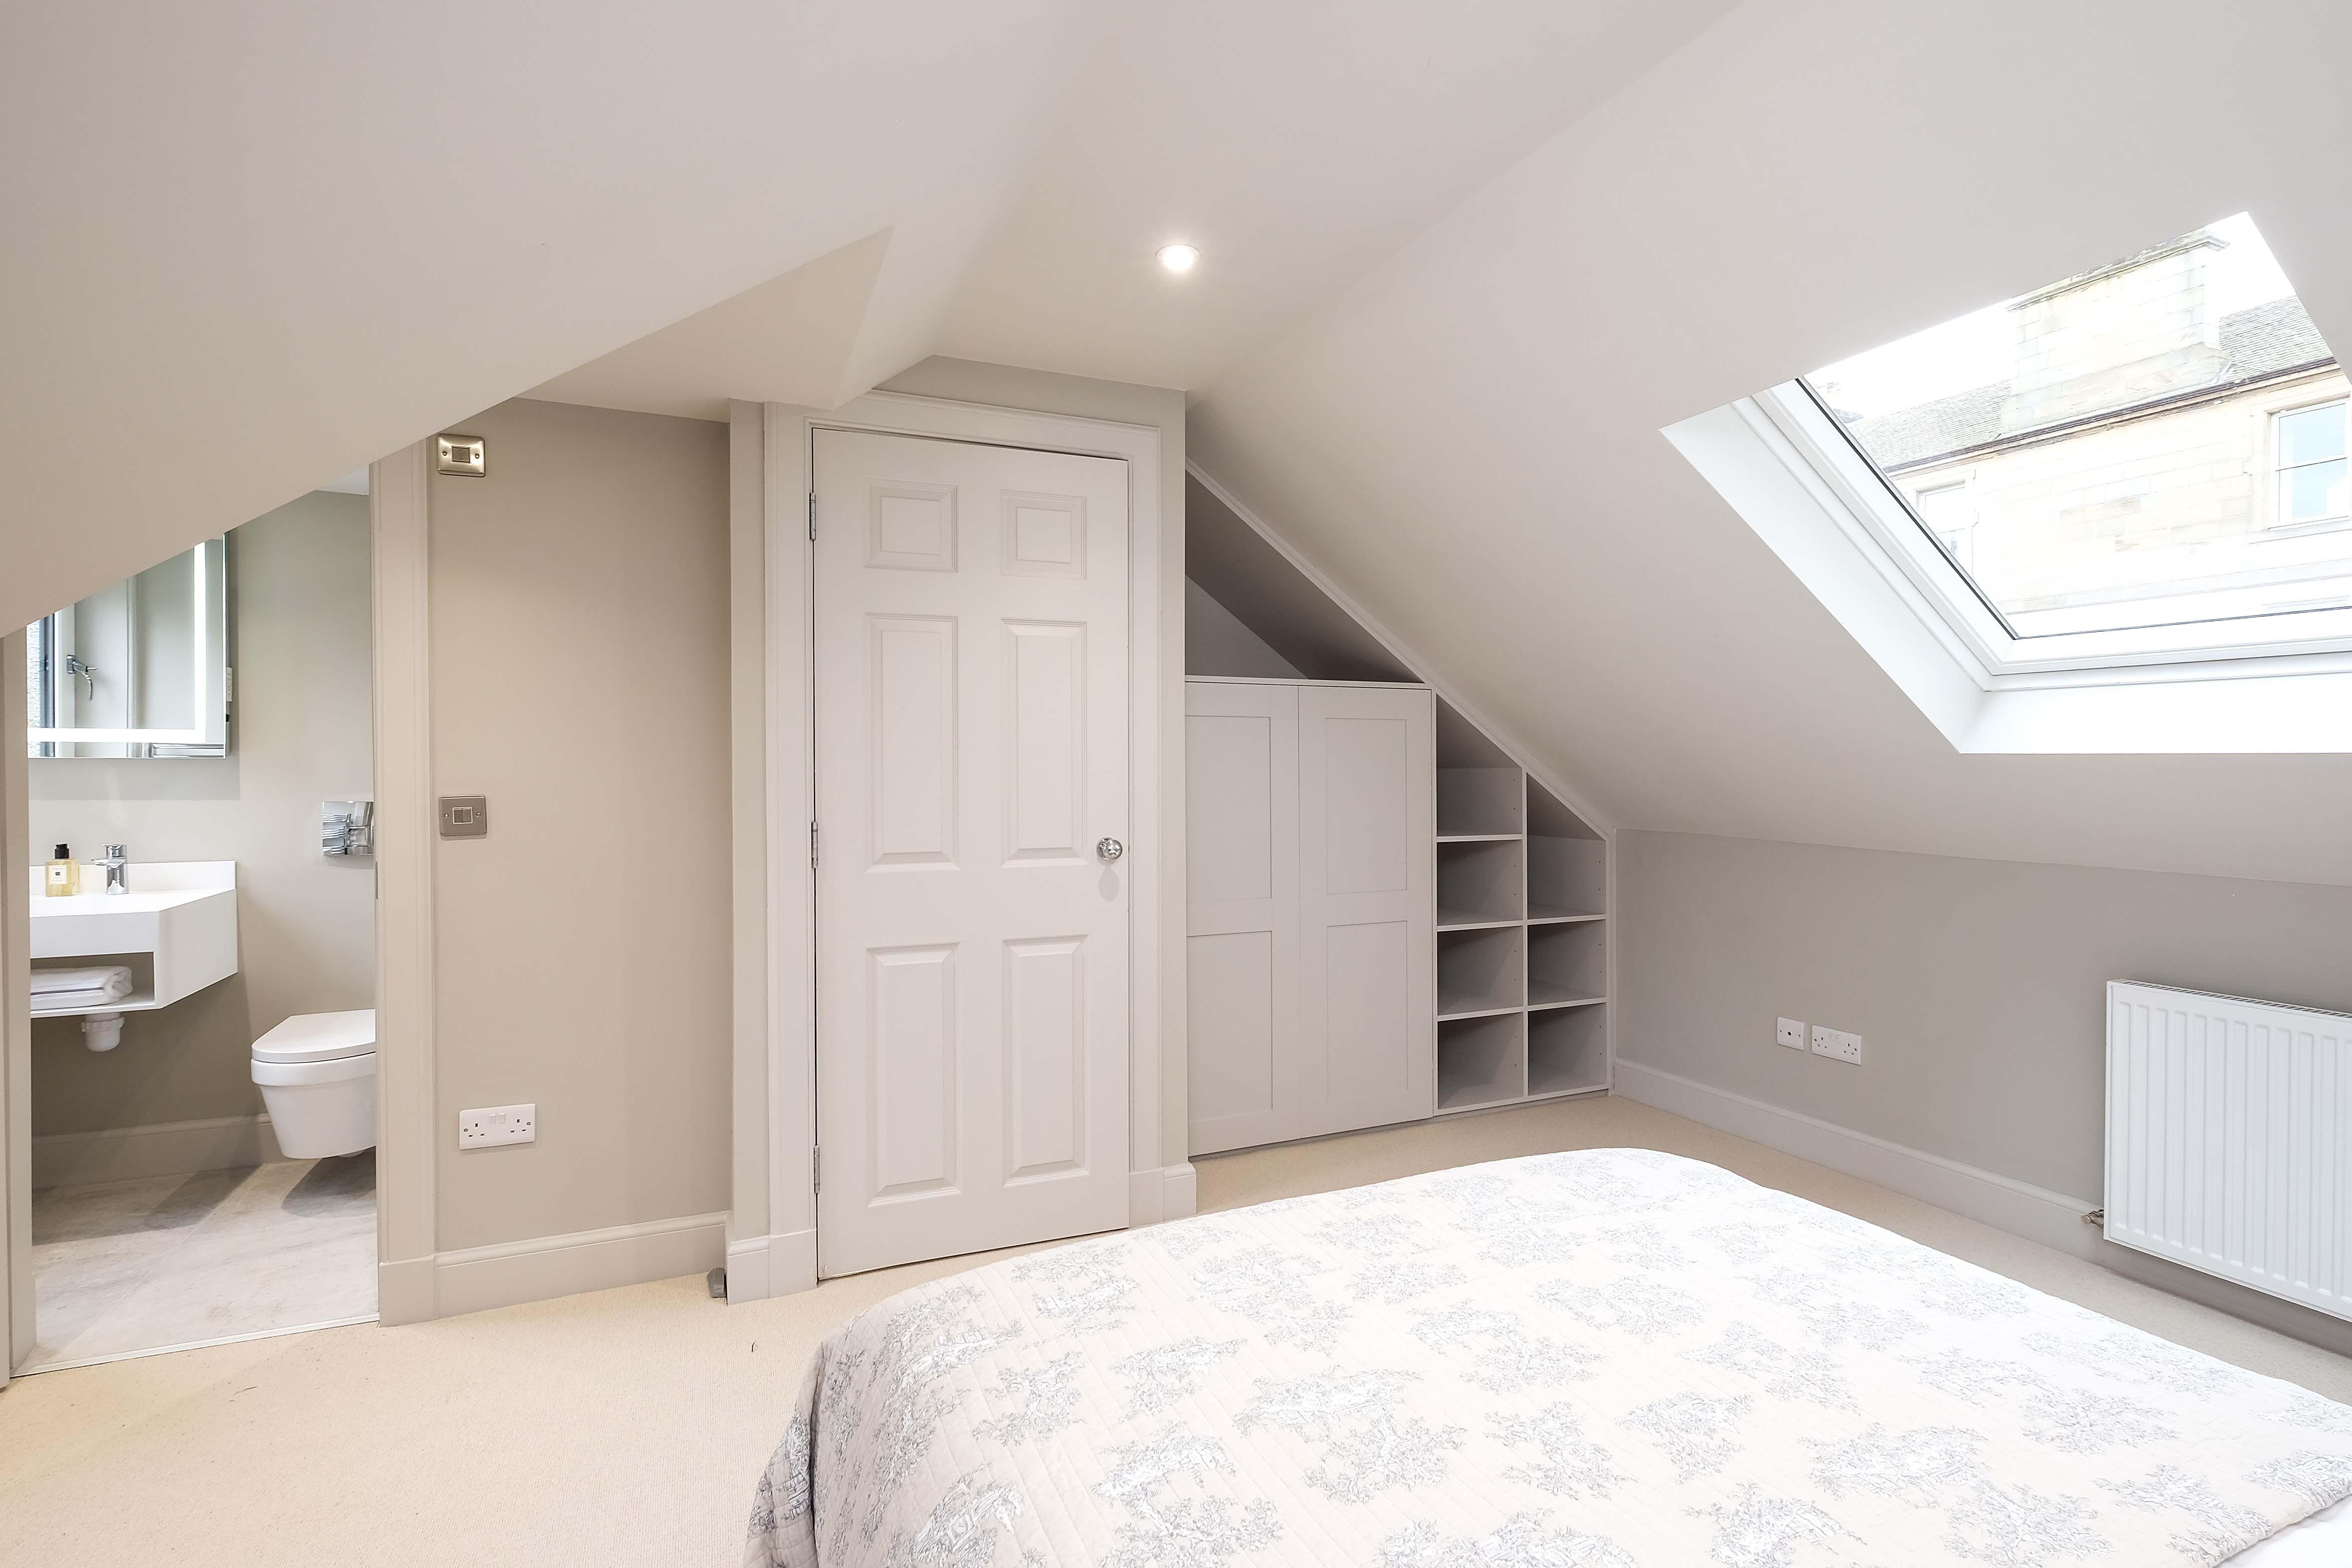 Loft conversion bedroom Edinburgh with bespoke storage